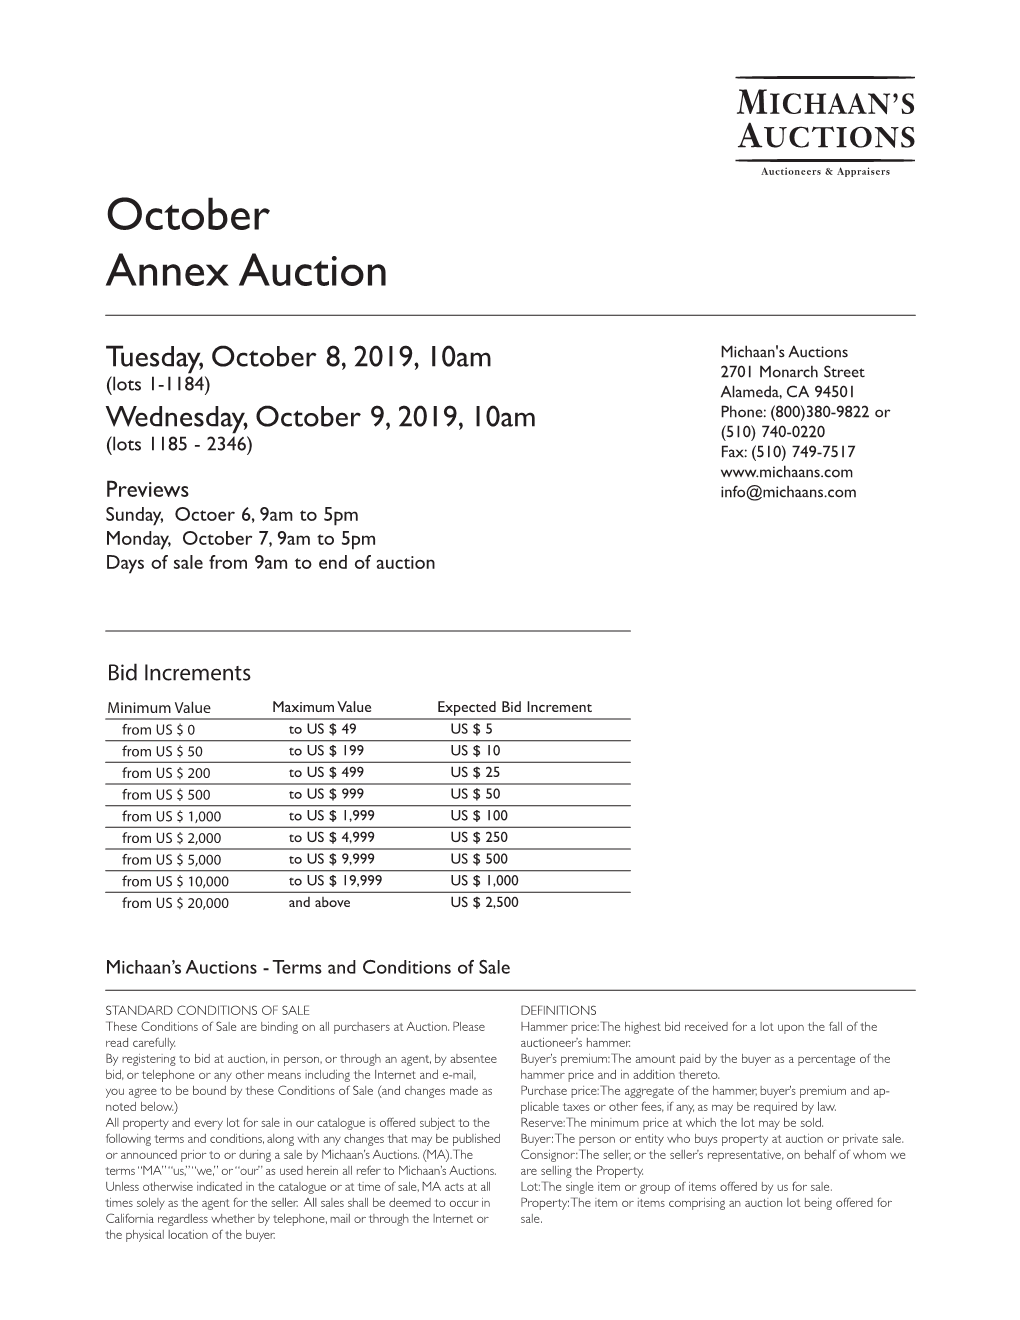 October Annex Auction